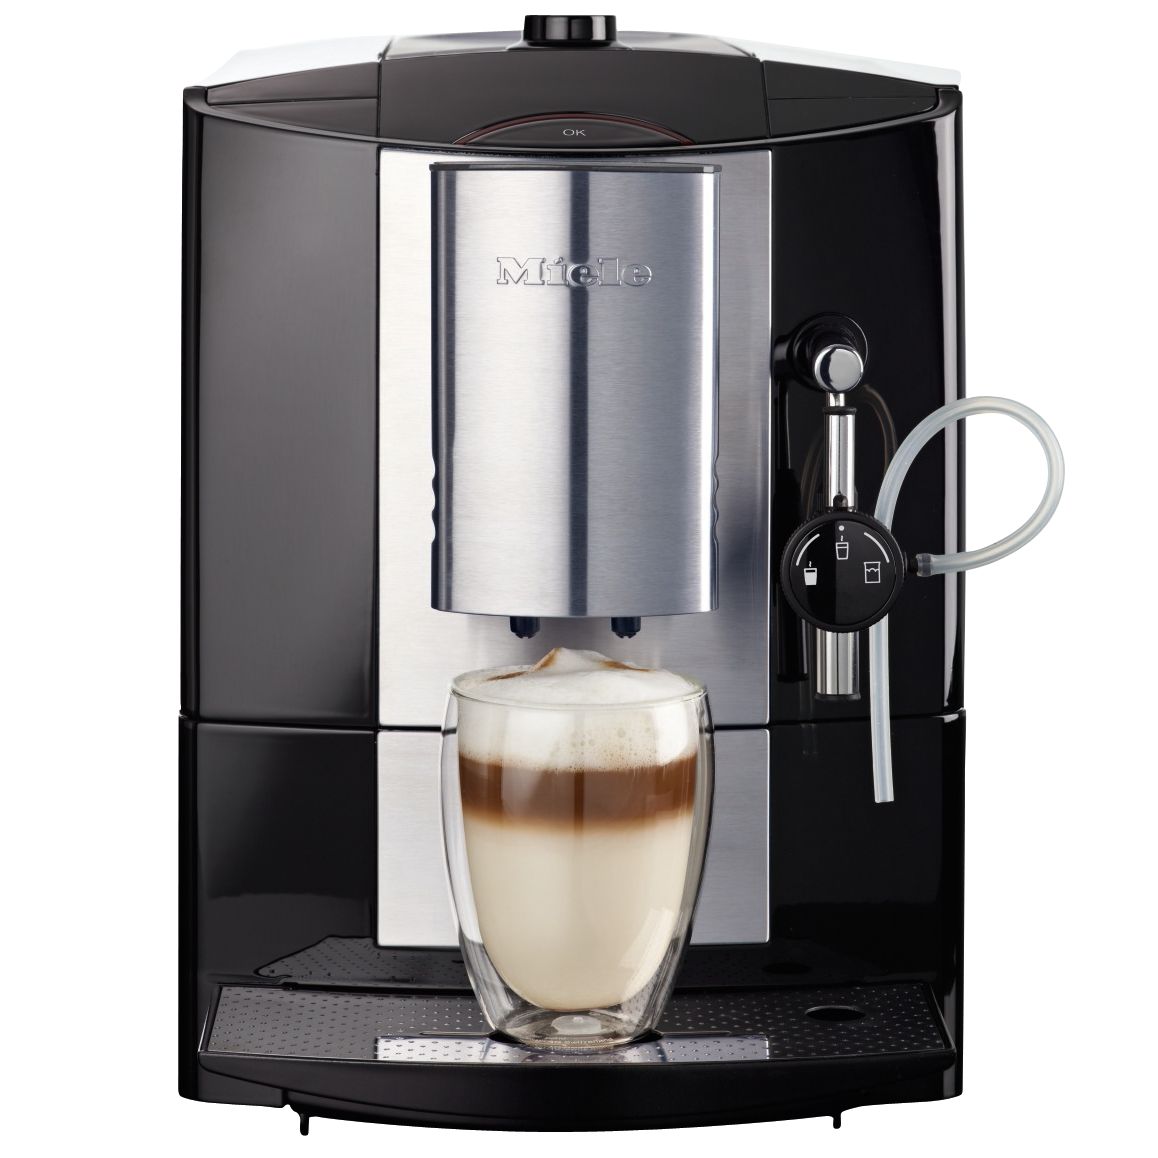 Miele CM5100 Barista Coffee Machine at JohnLewis